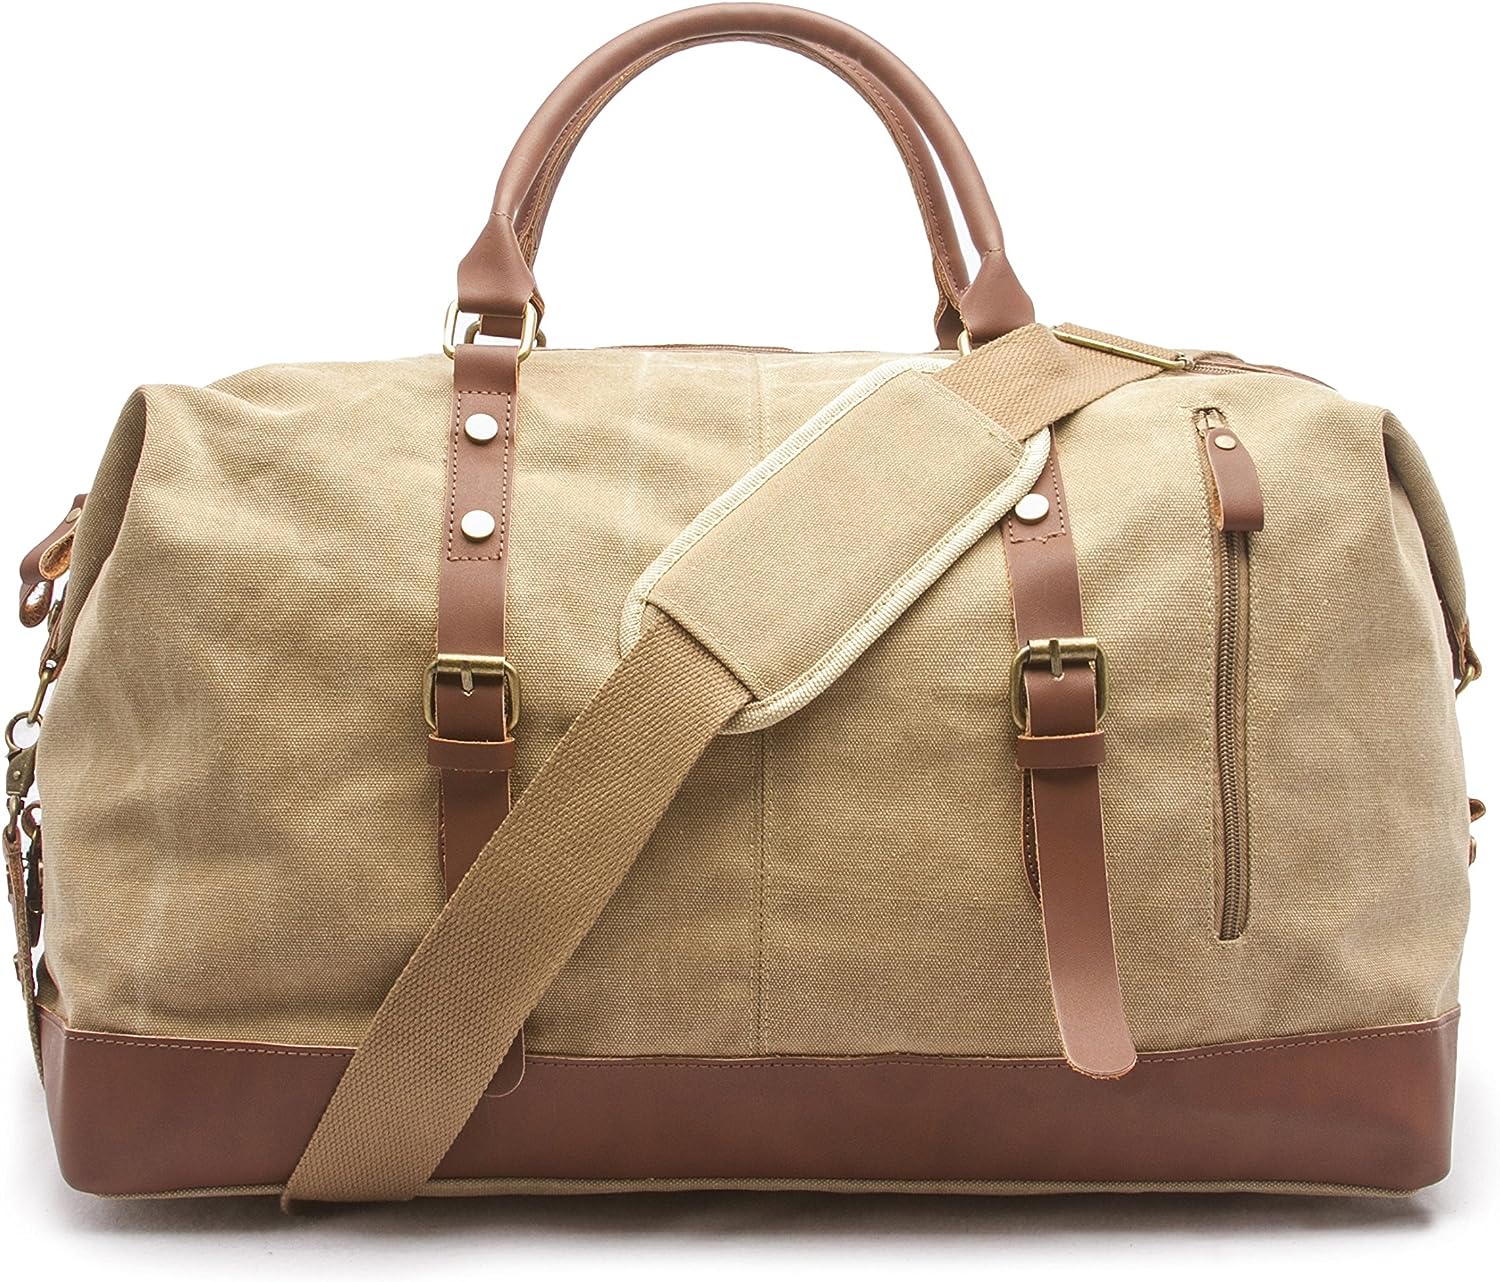 travel size duffel bag